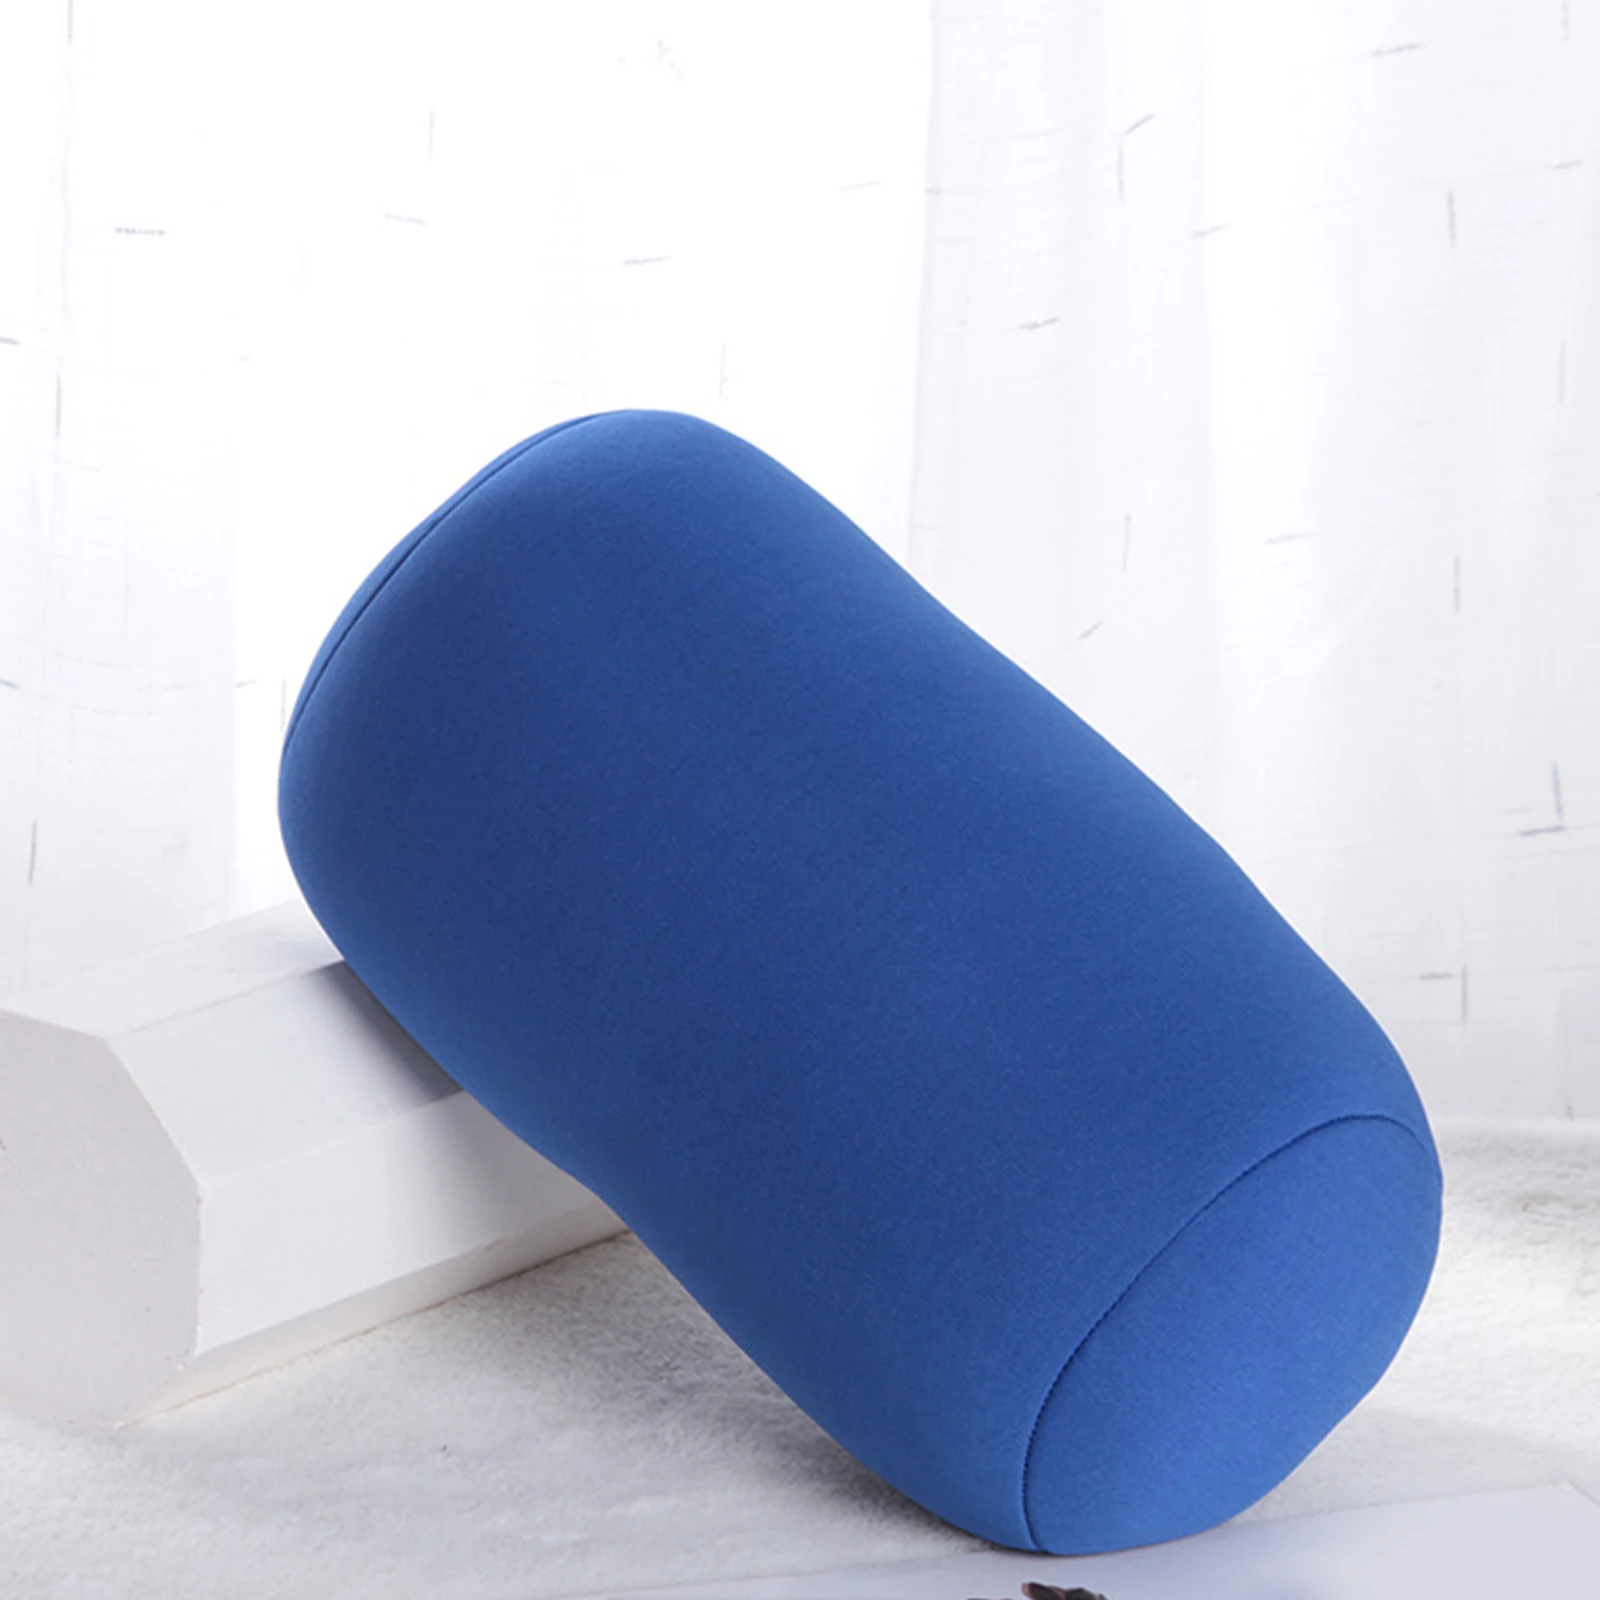 Micro Mini Microbead Back Cushion Roll Throw Pillow Travel Home Sleep Neck Support Comfortable Travel Pillow